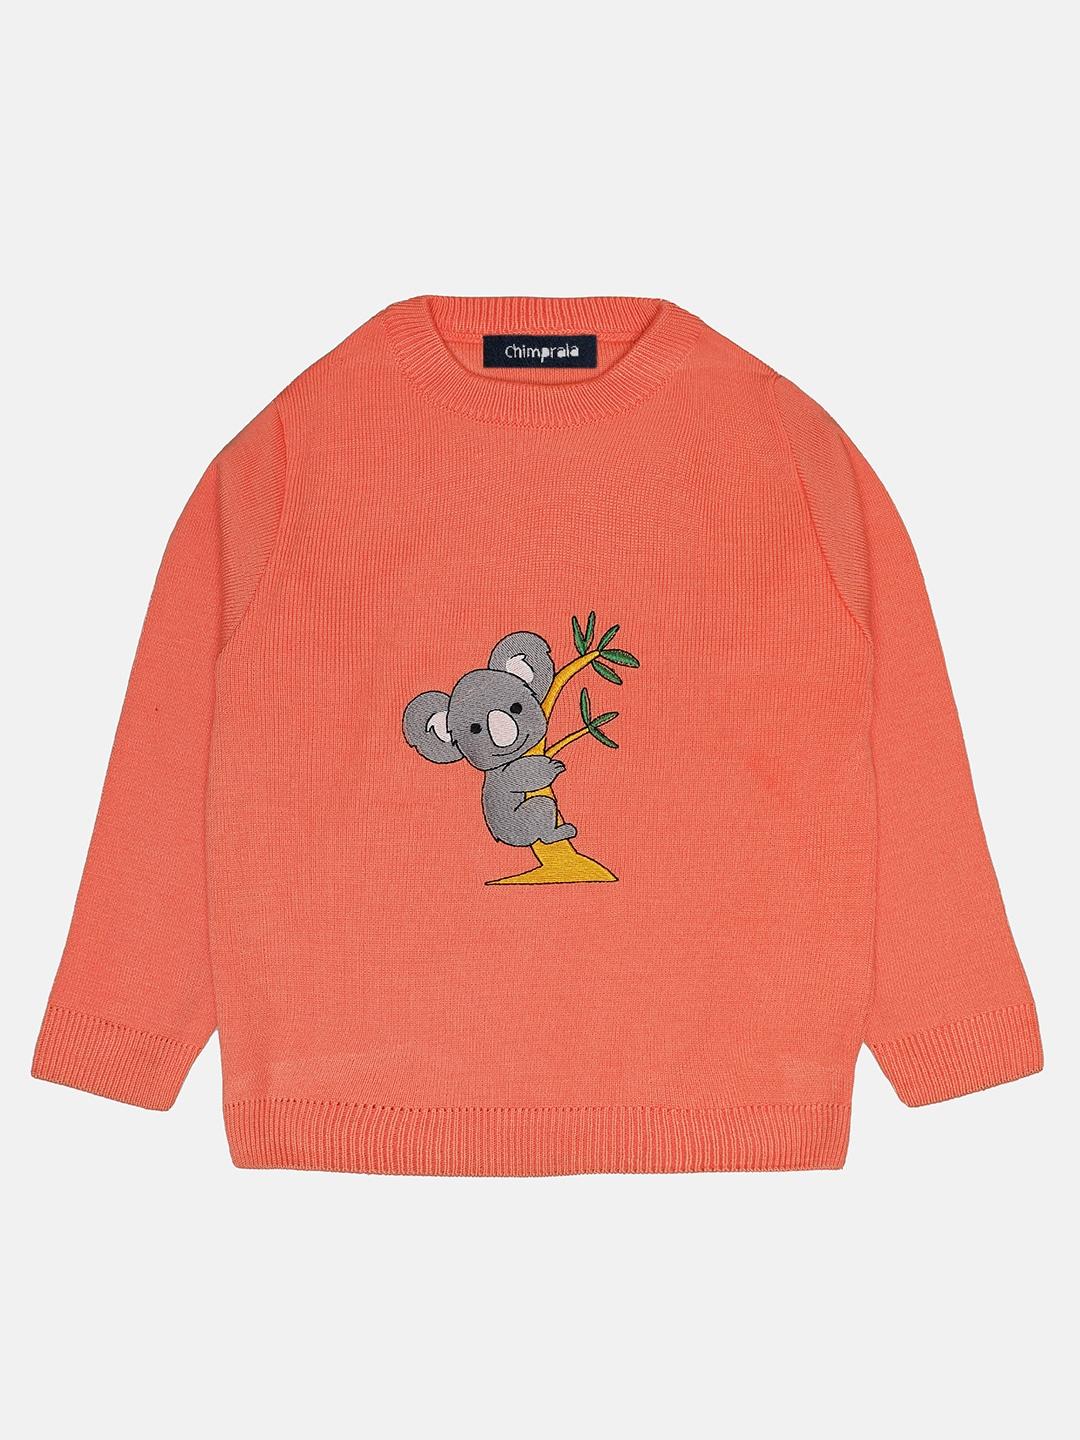 chimprala boys orange & grey animal printed woolen pullover